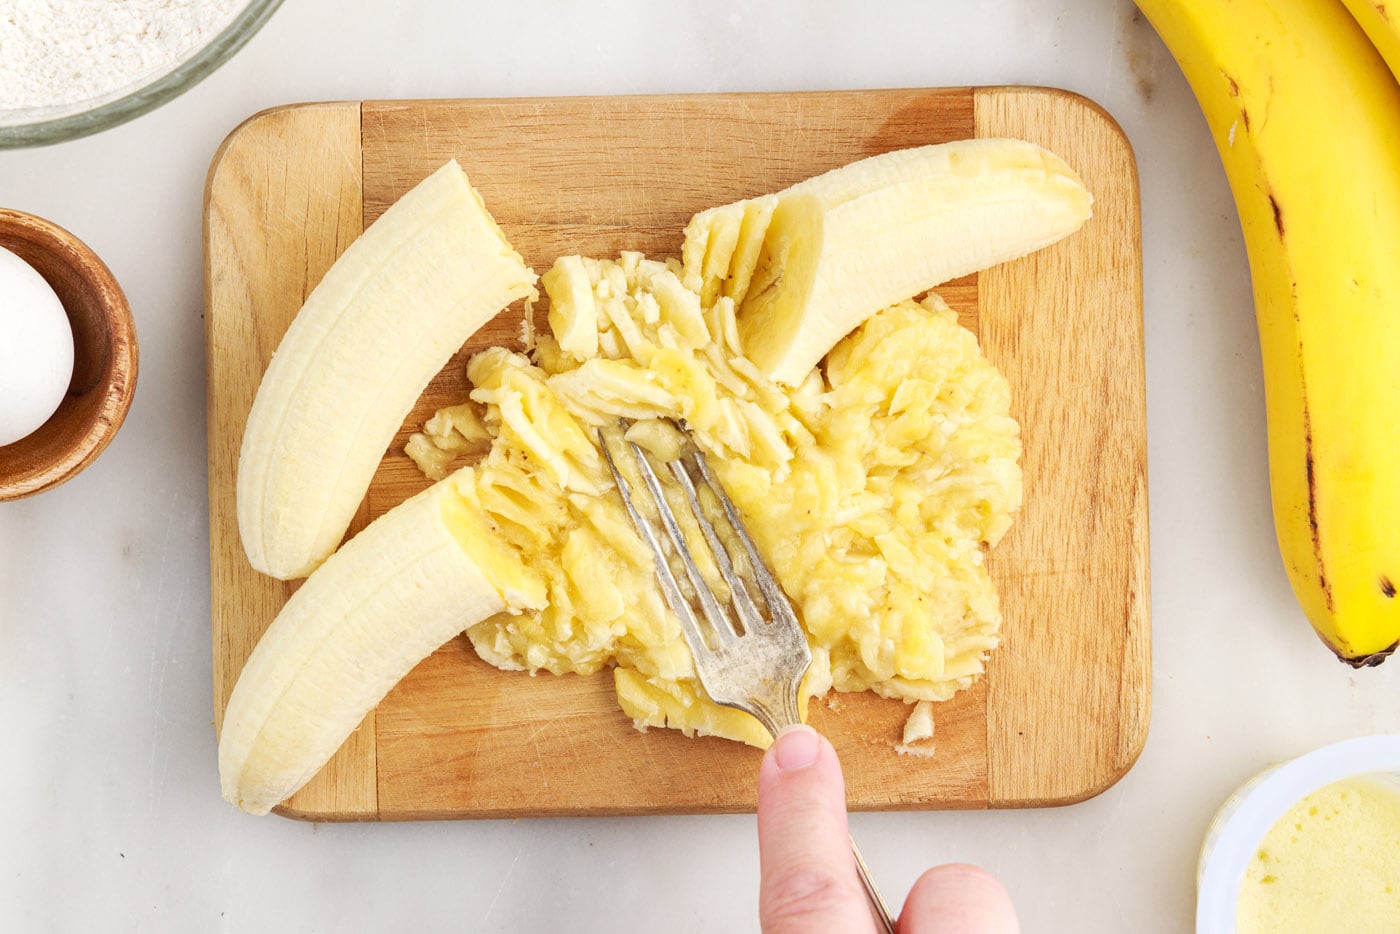 mashing ripe bananas with a fork